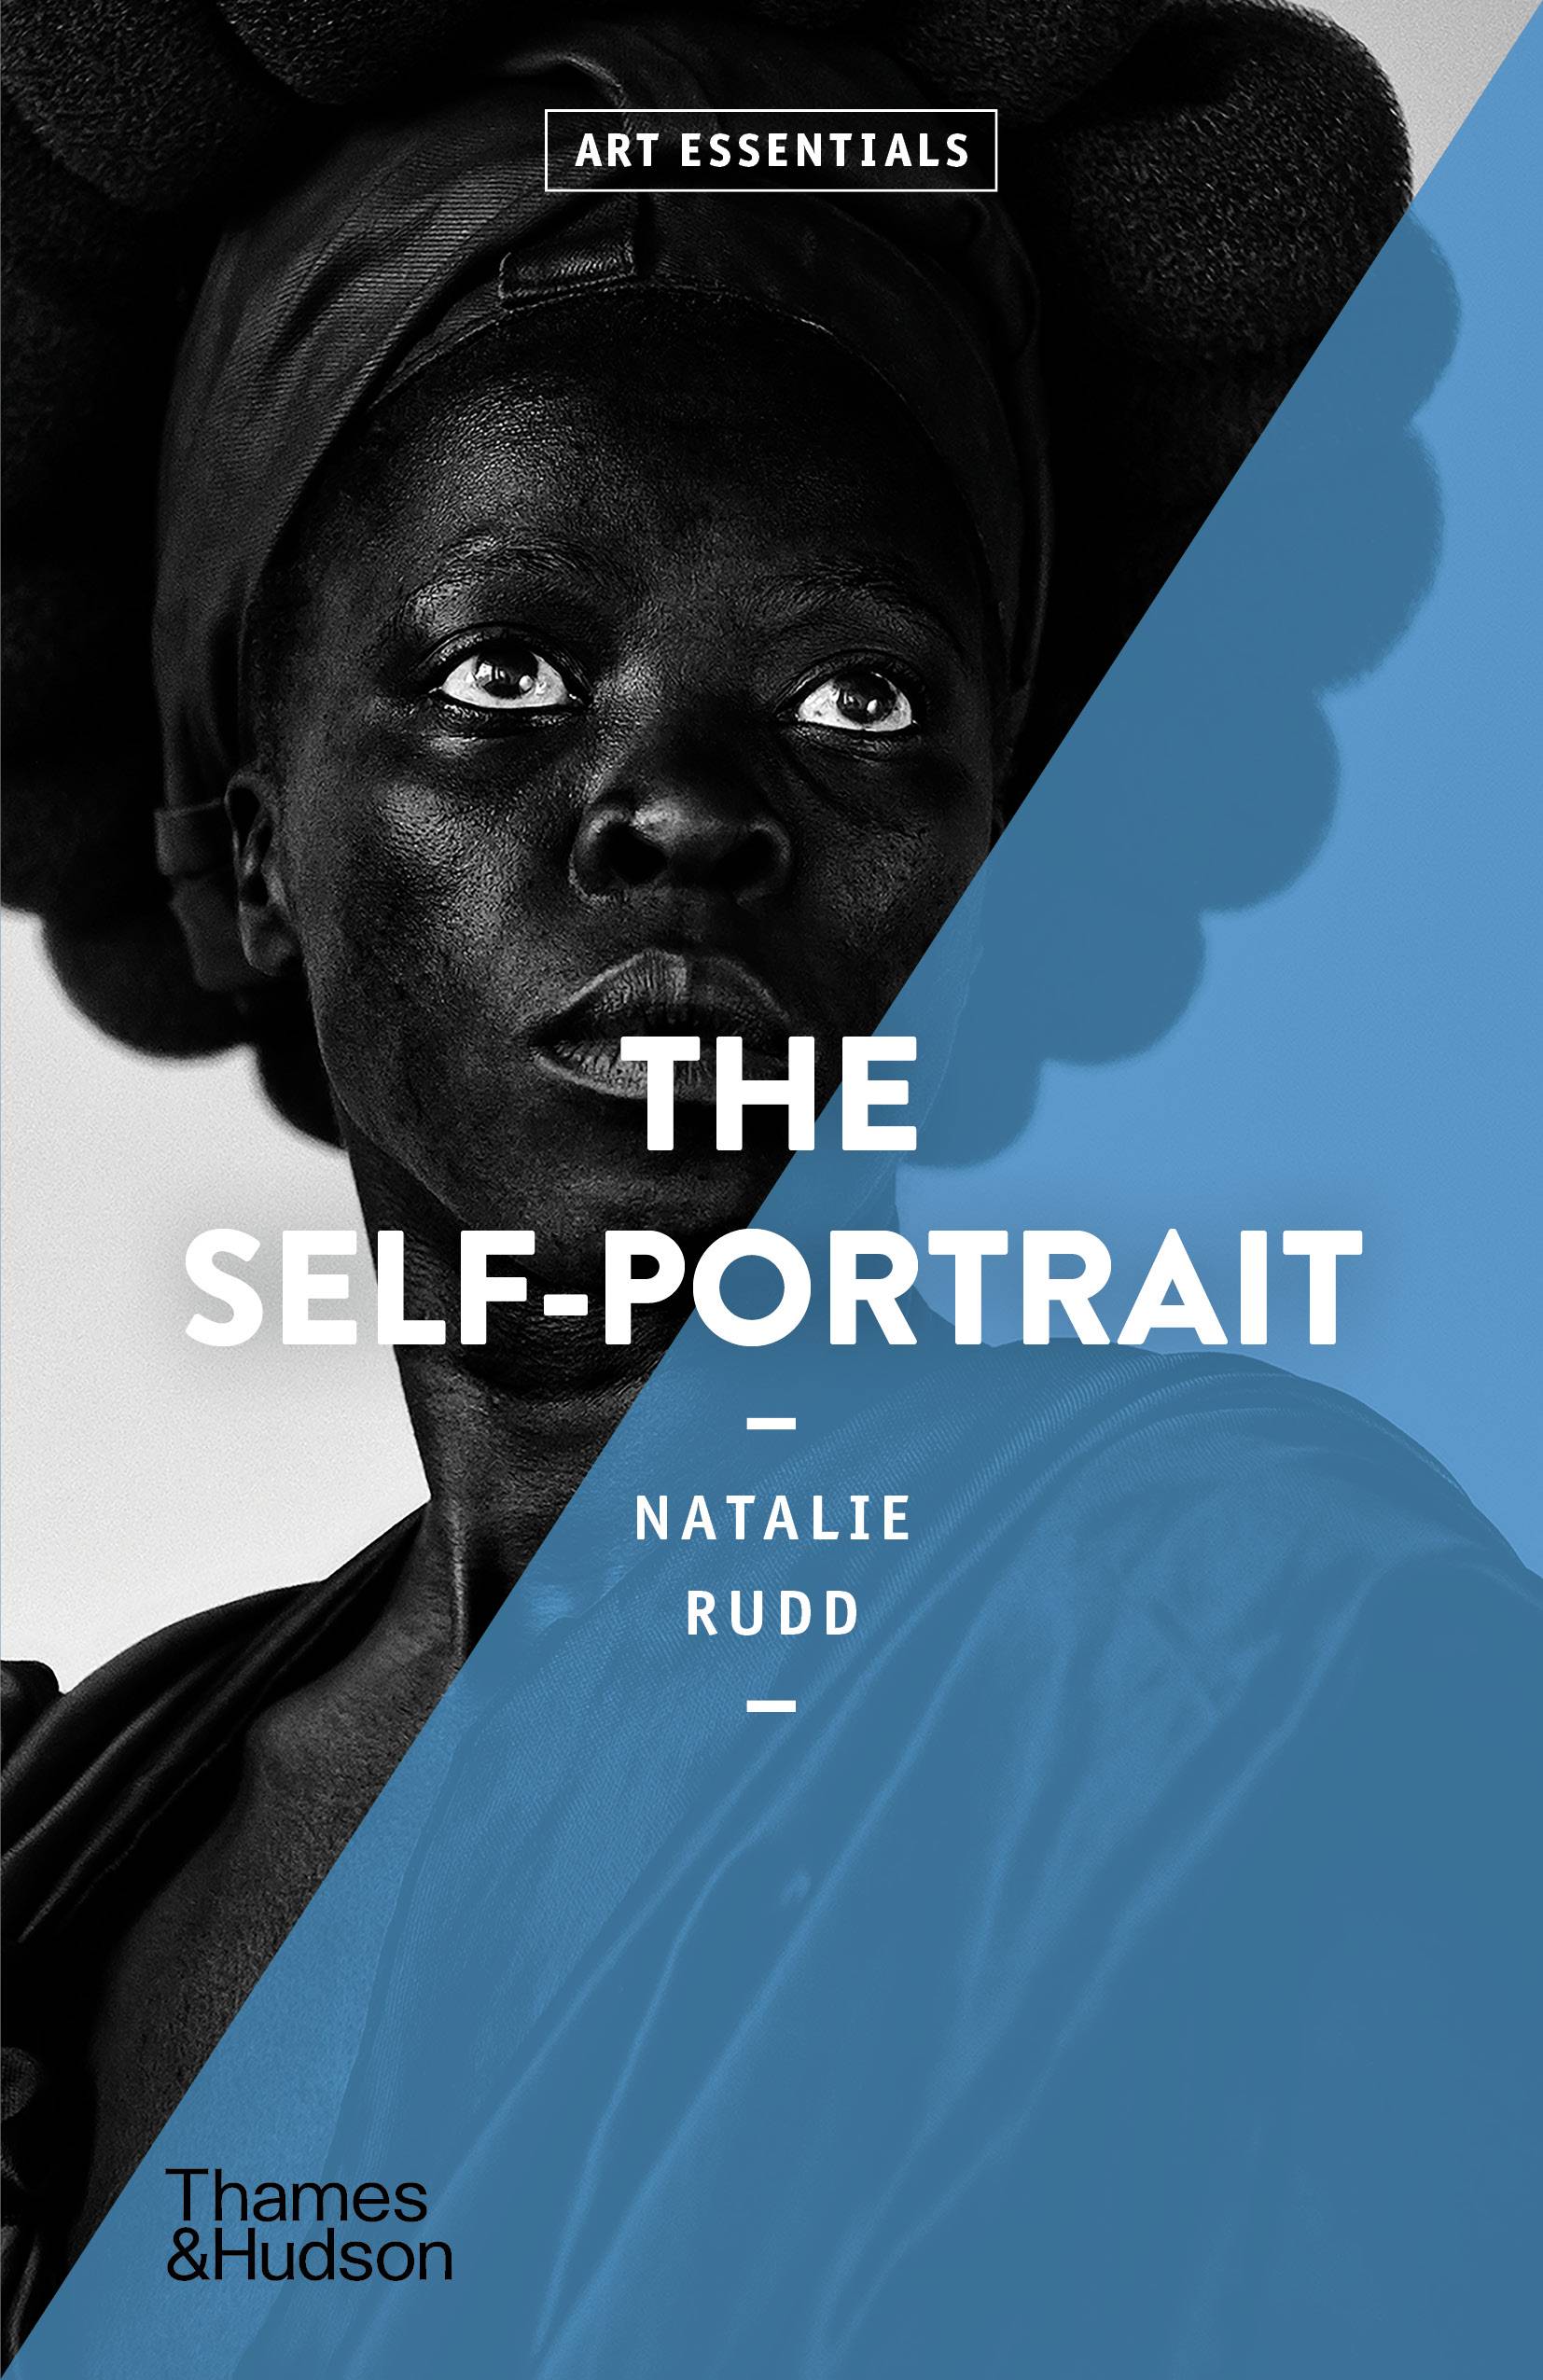 The Self-Portrait (Art Essentials) by Natalie Rudd book cover